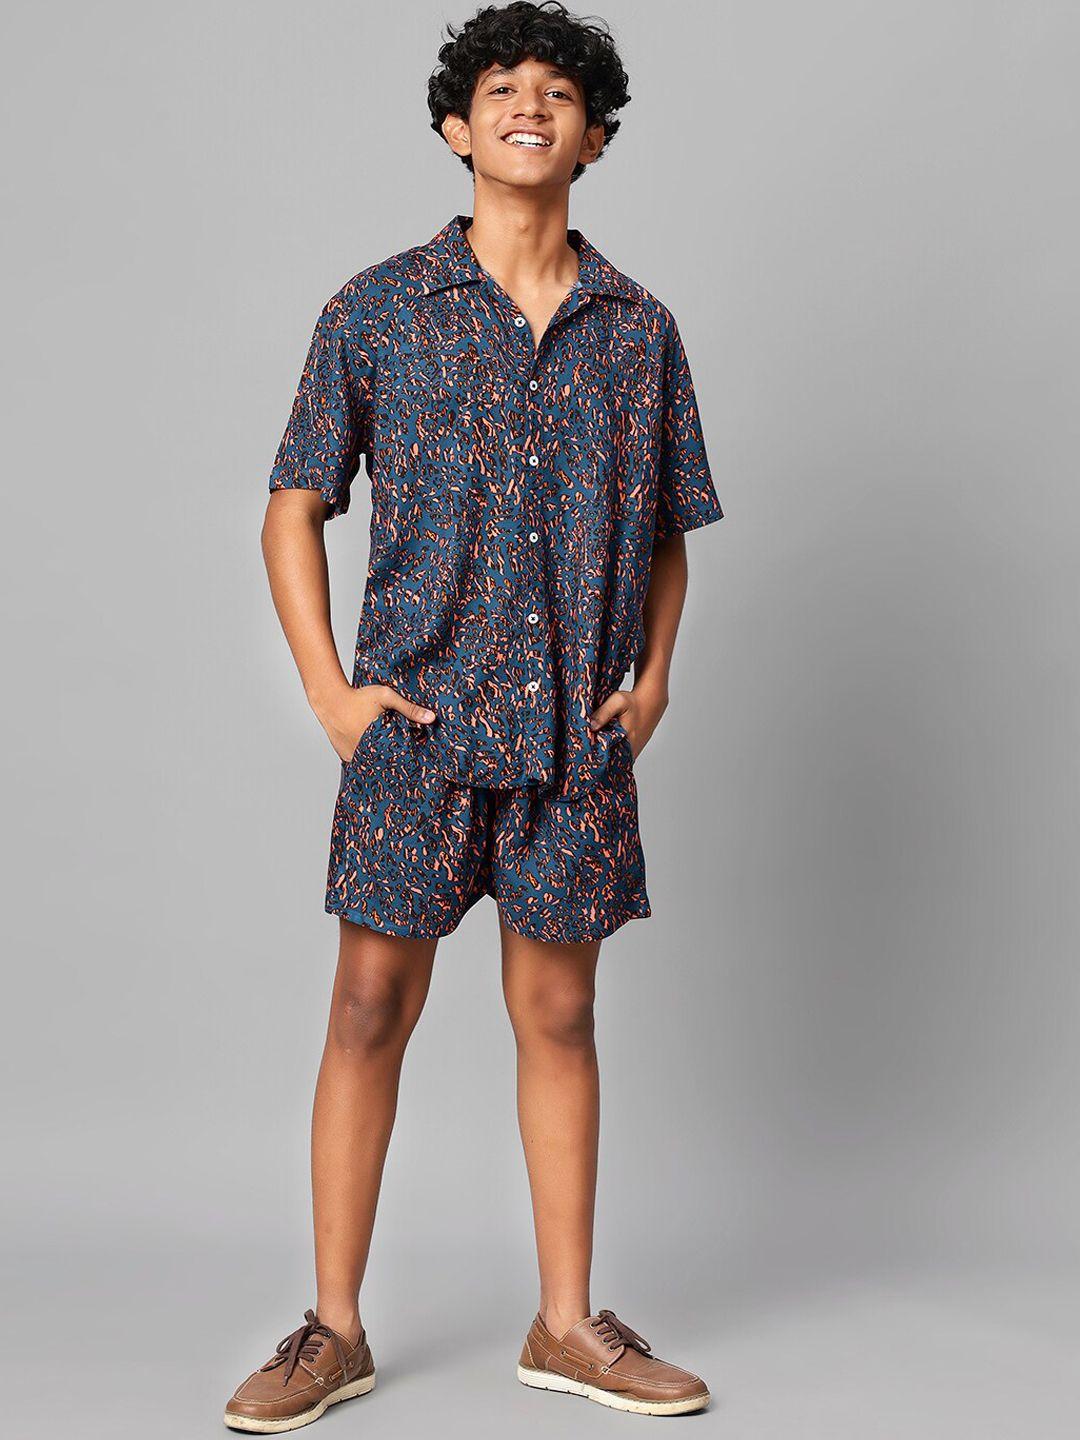 teentrums boys abstract printed shirt with shorts